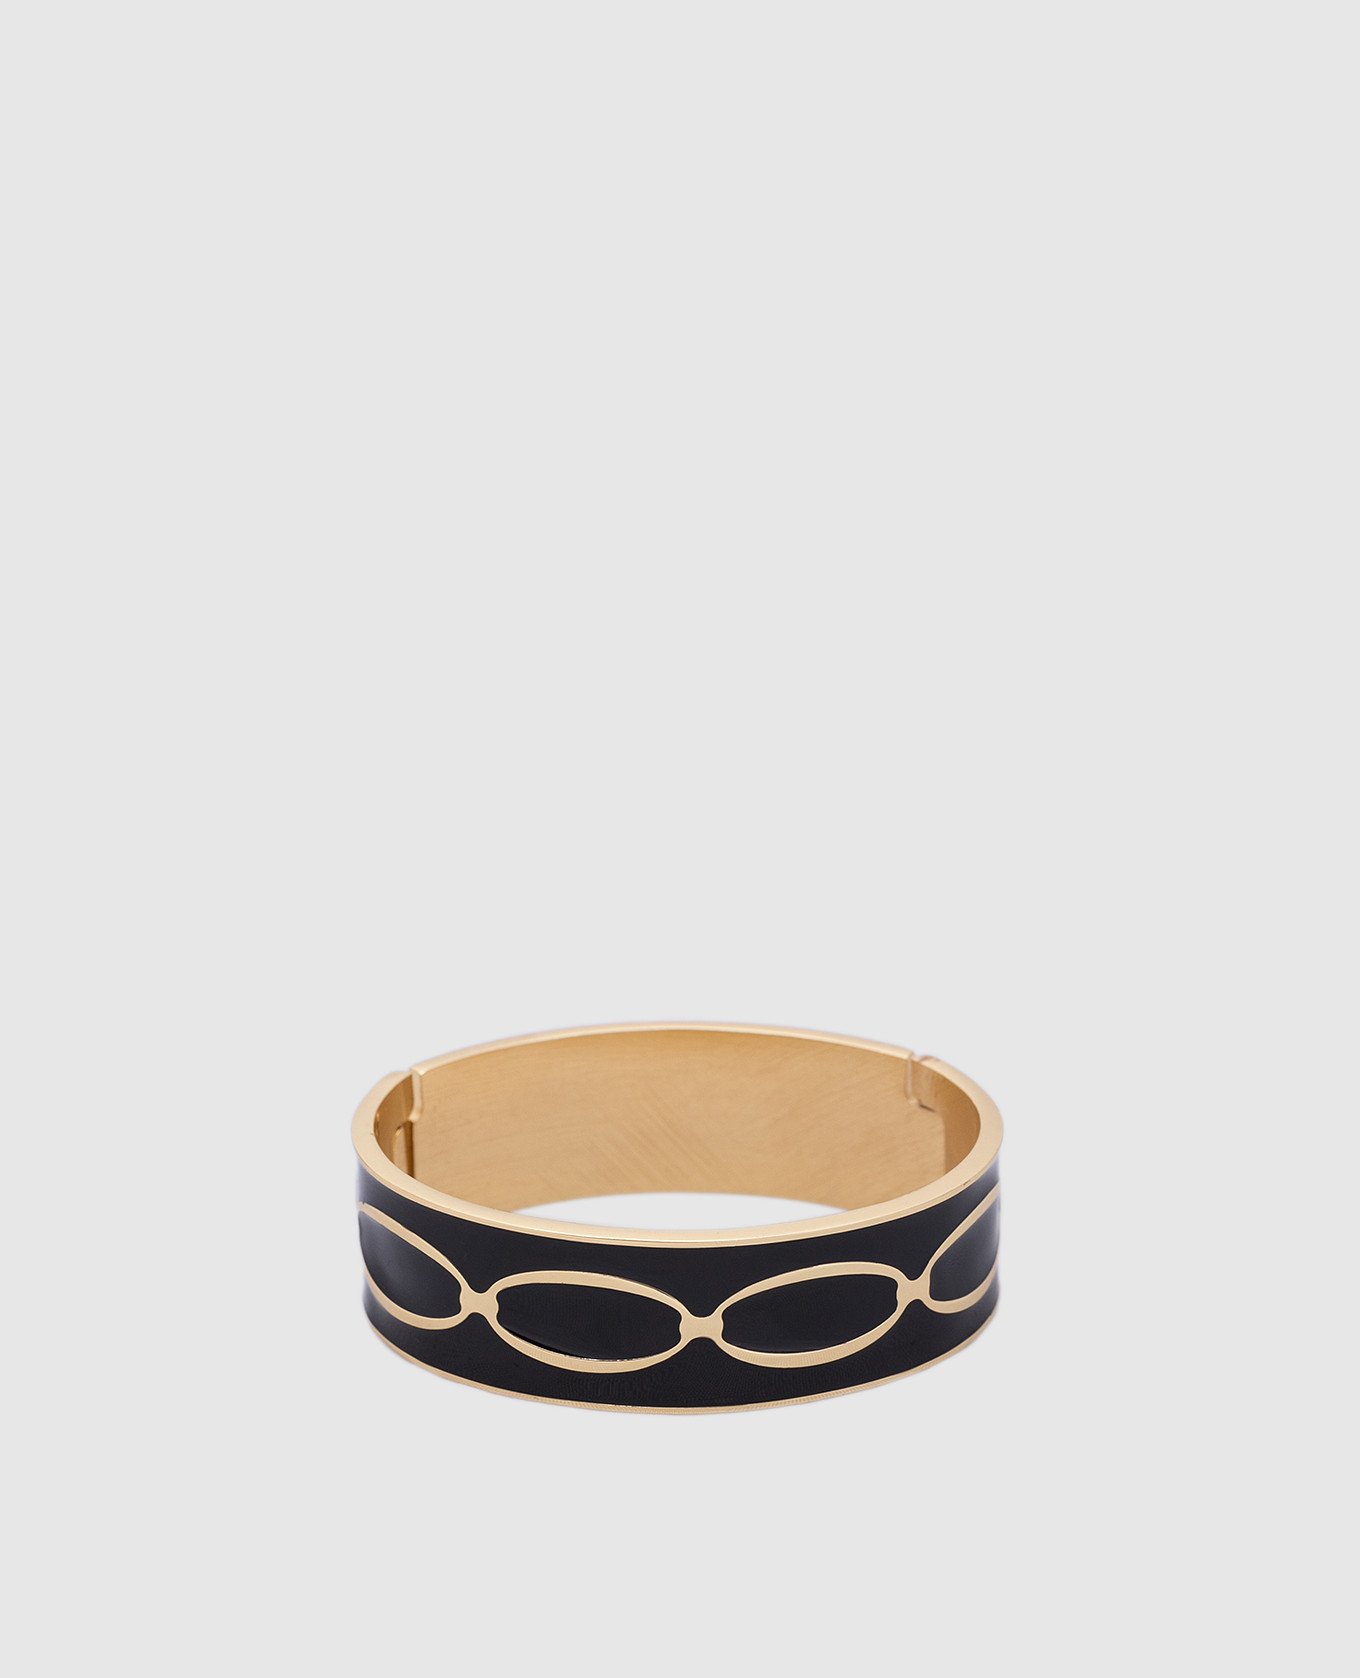 Black Knot bracelet with 24k gold plating